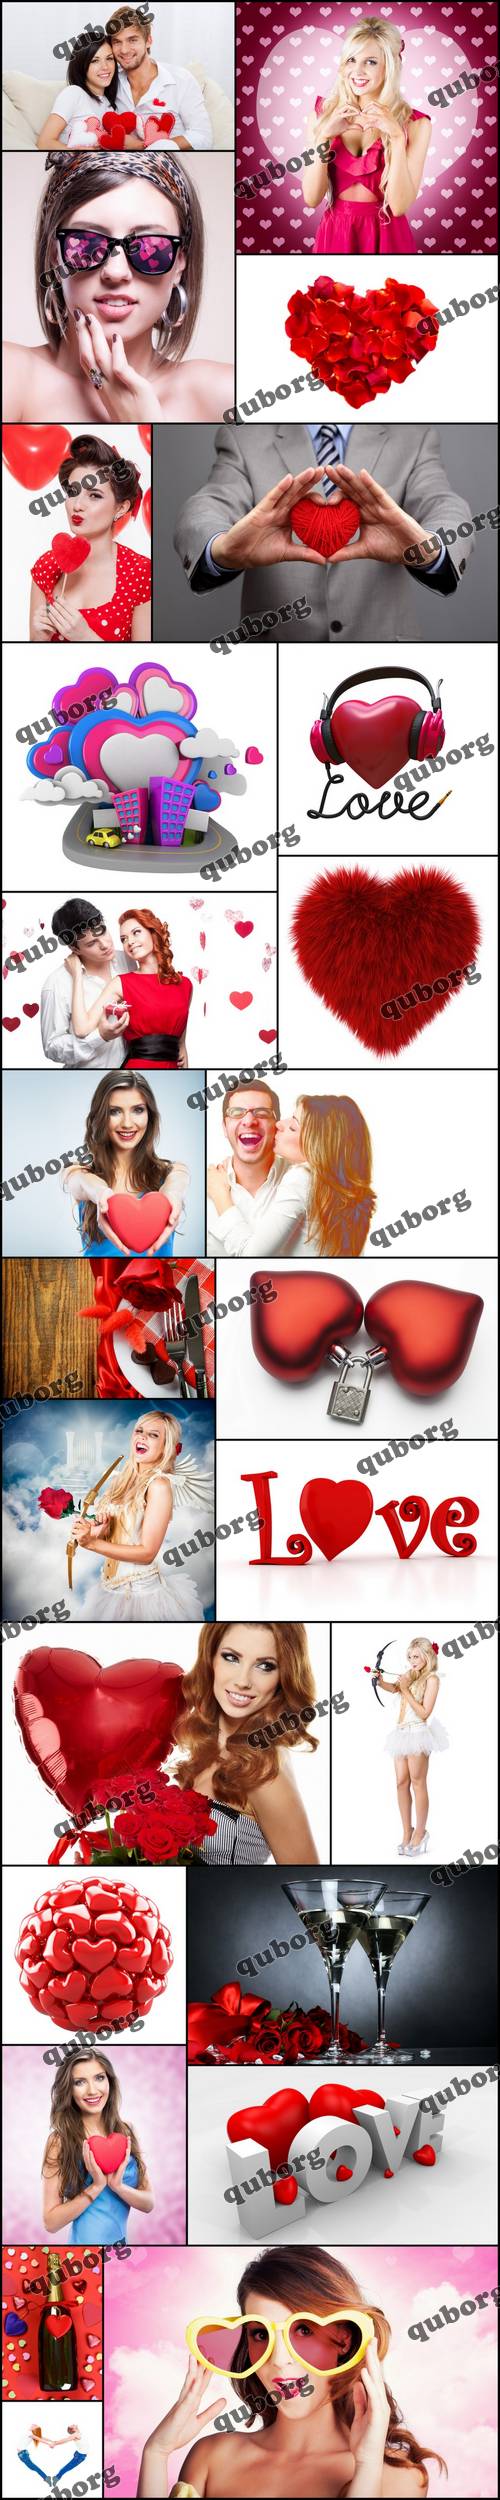 Stock Photos - Celebration Valentines Day 3